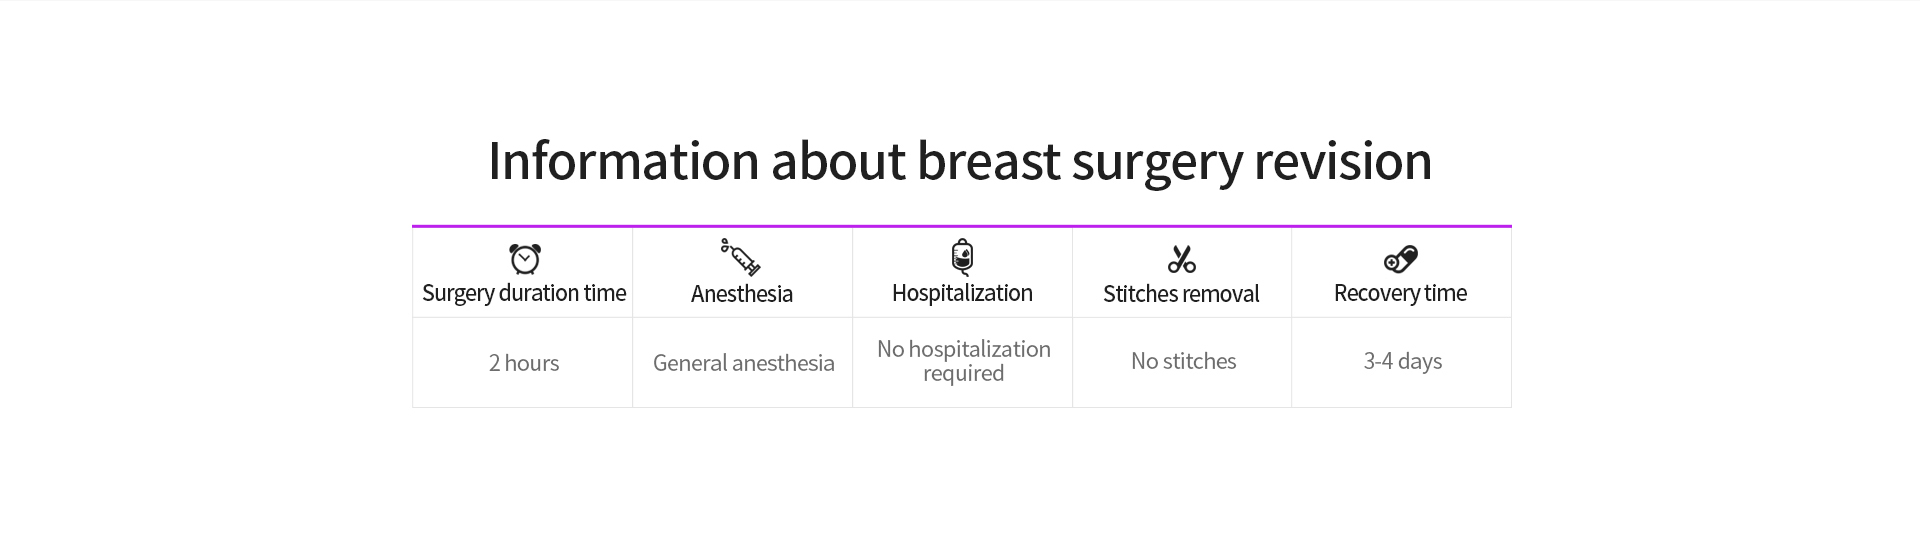 Glovi Breast Surgery Revision img